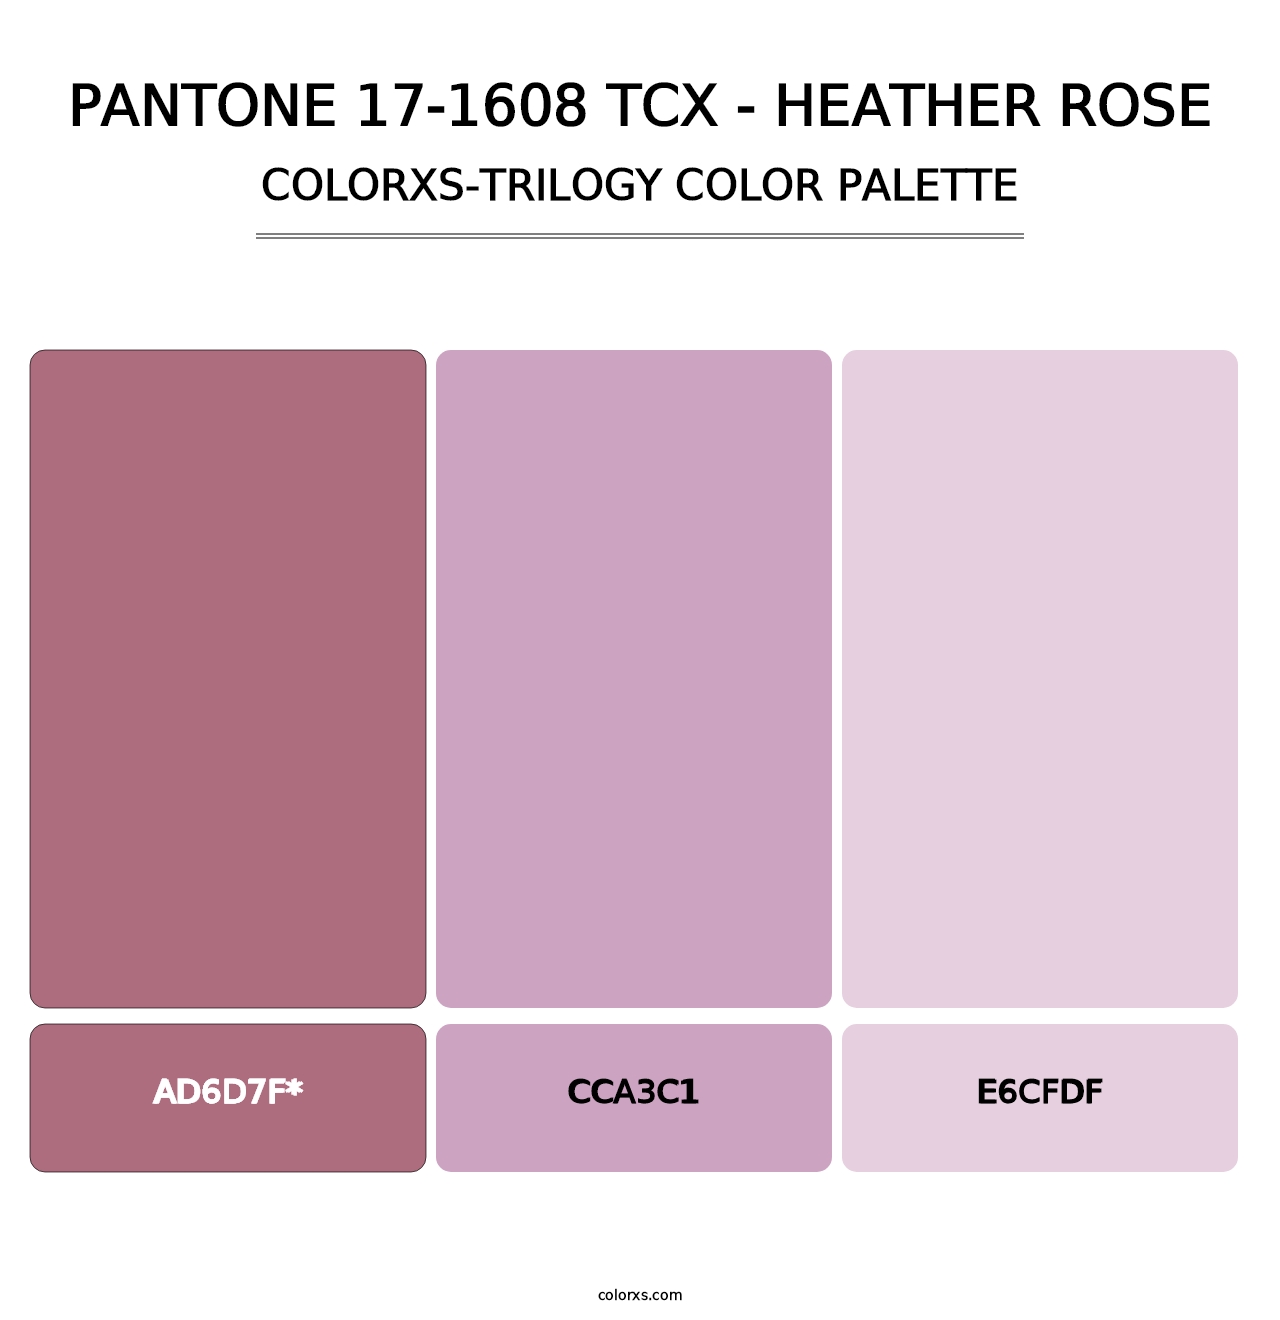 PANTONE 17-1608 TCX - Heather Rose - Colorxs Trilogy Palette